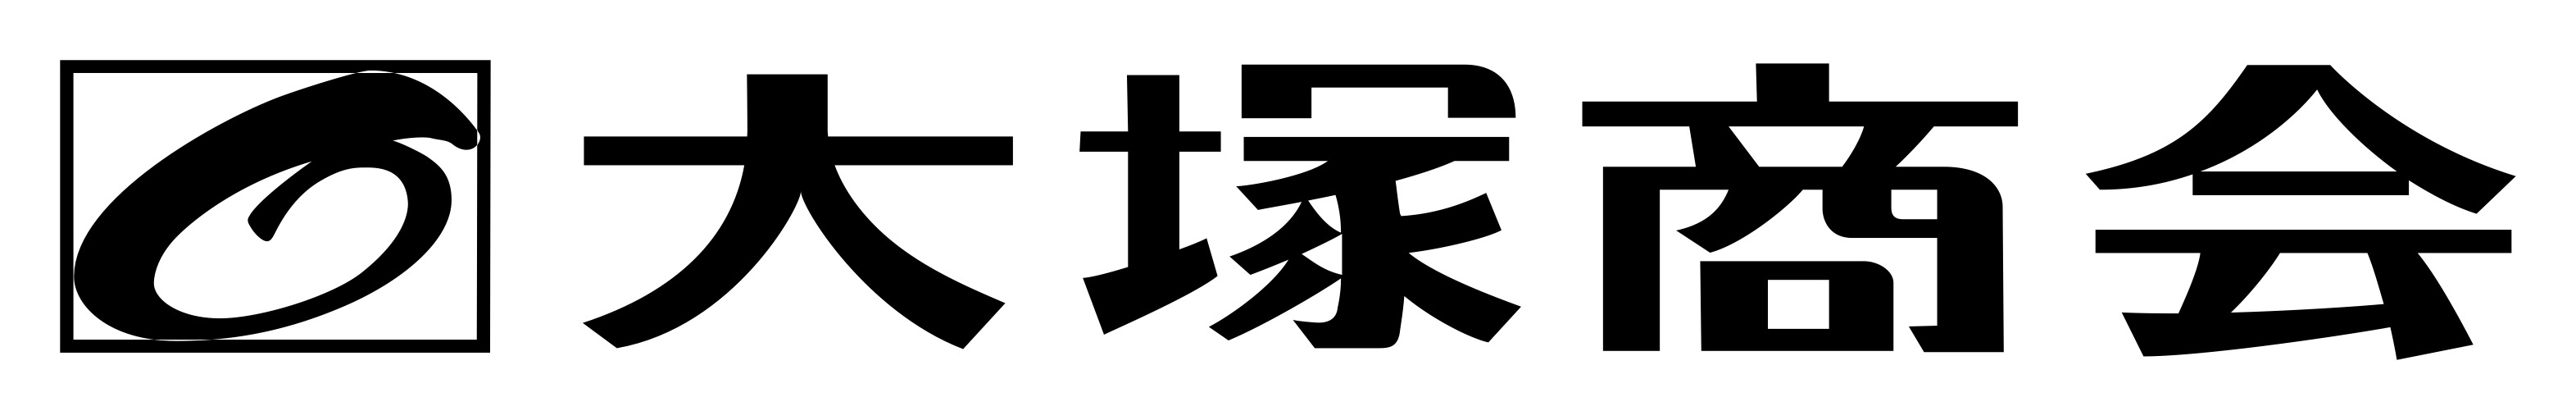 Otsuka Logo icons